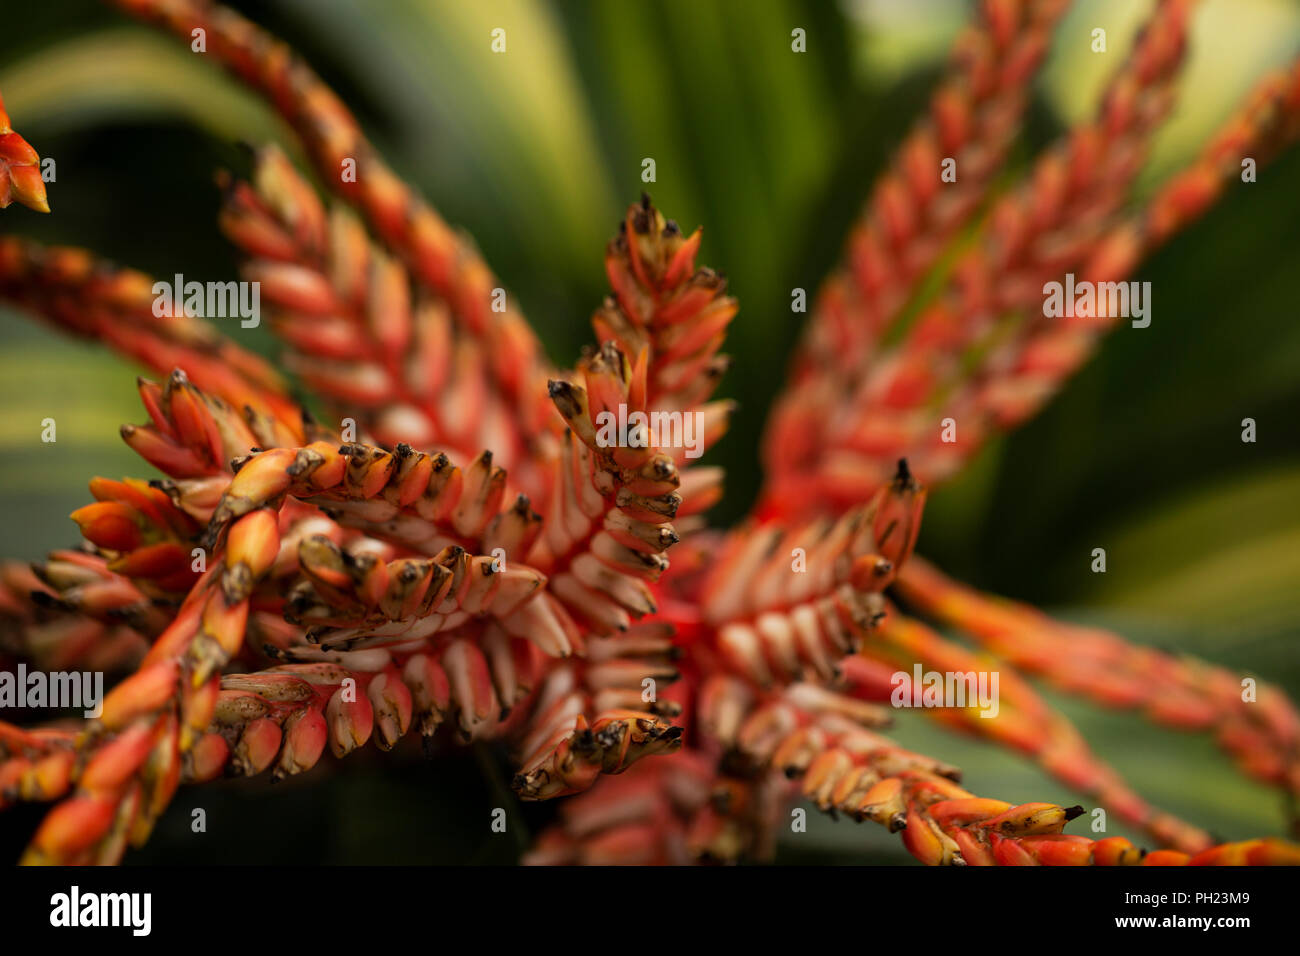 Aechmea, a bromeliad, in variety Patricia's Secret. Stock Photo